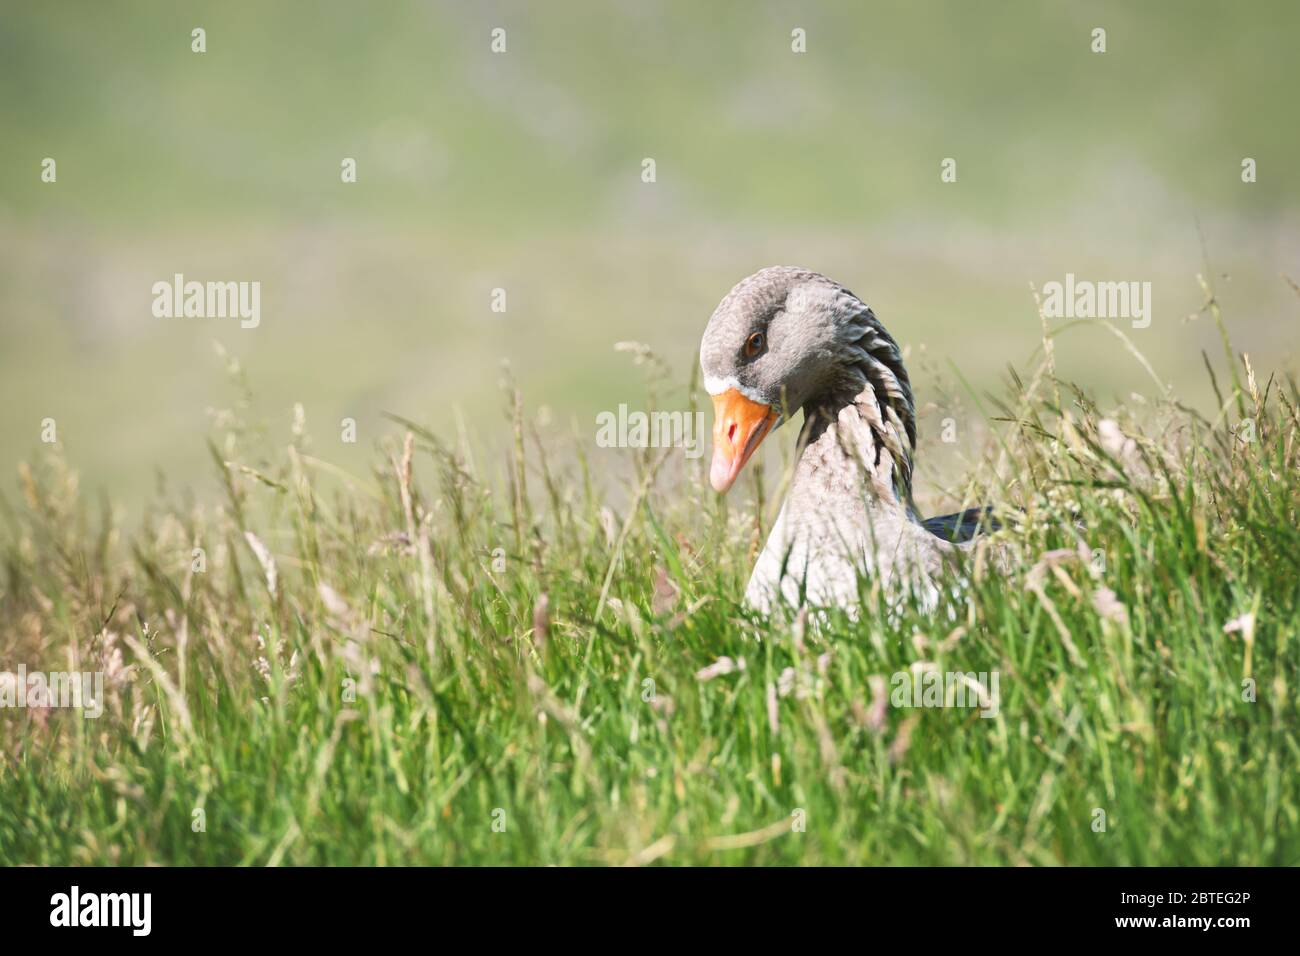 Grey wild geese on green grass closeup. Animal photography Stock Photo